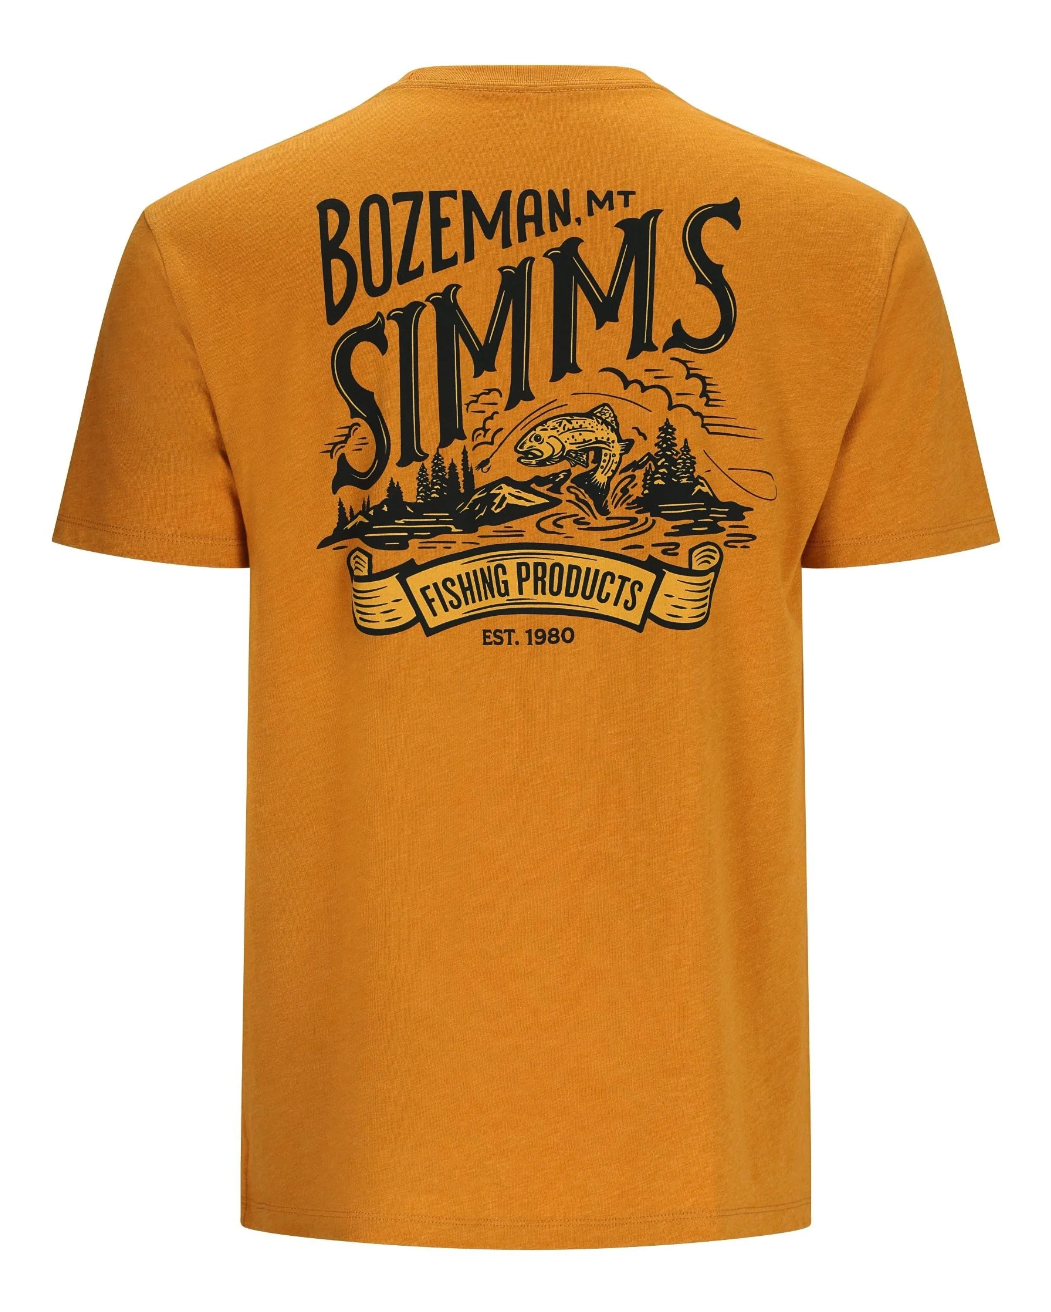 Simms Bozeman Scene T-Shirt for sale online.